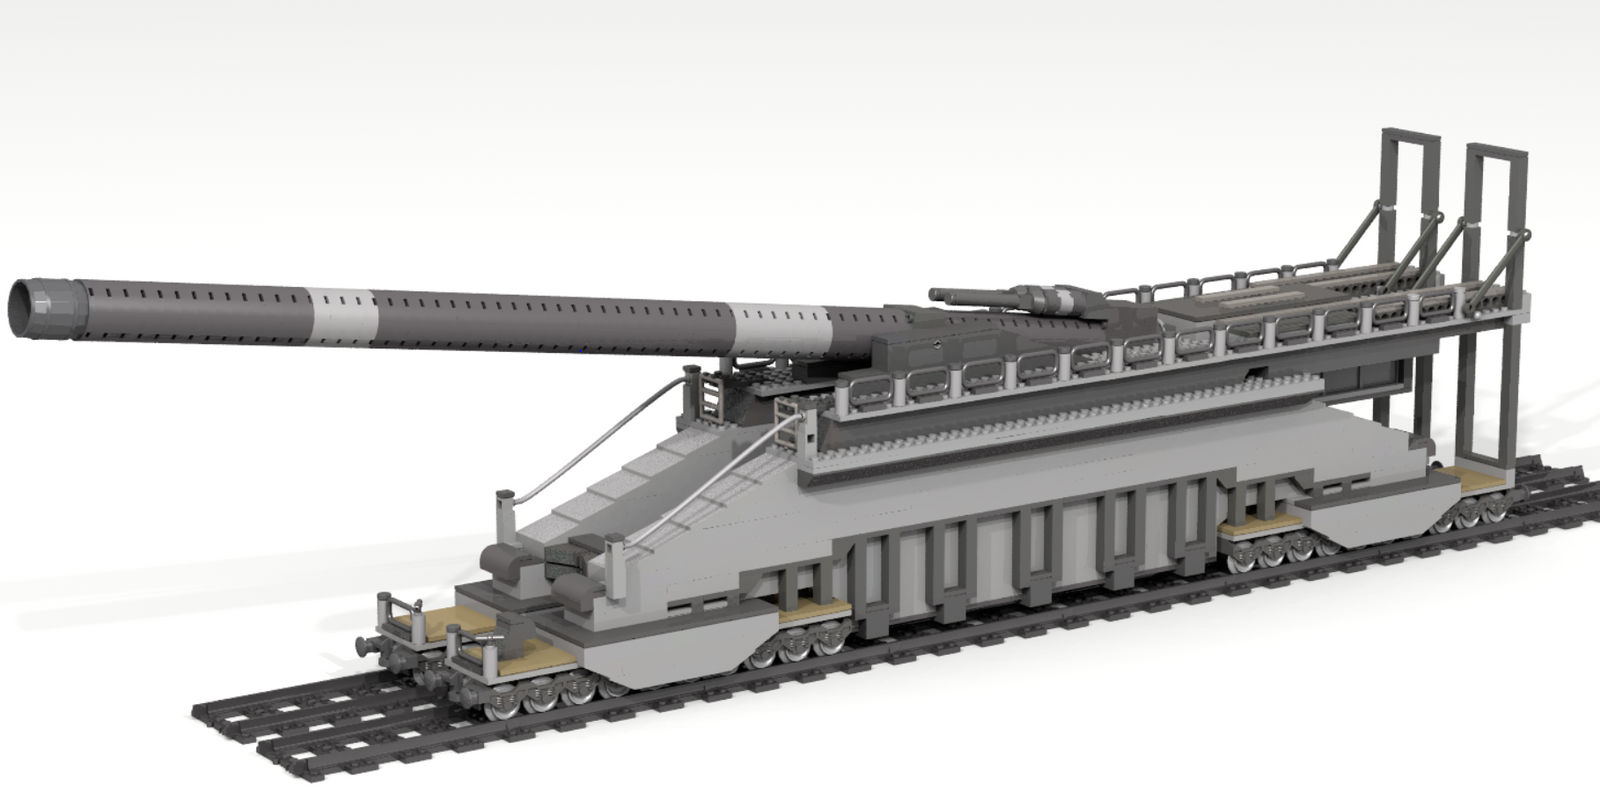 LEGO Schwerer Gustav Replica 9 by Dr-Doomster on DeviantArt